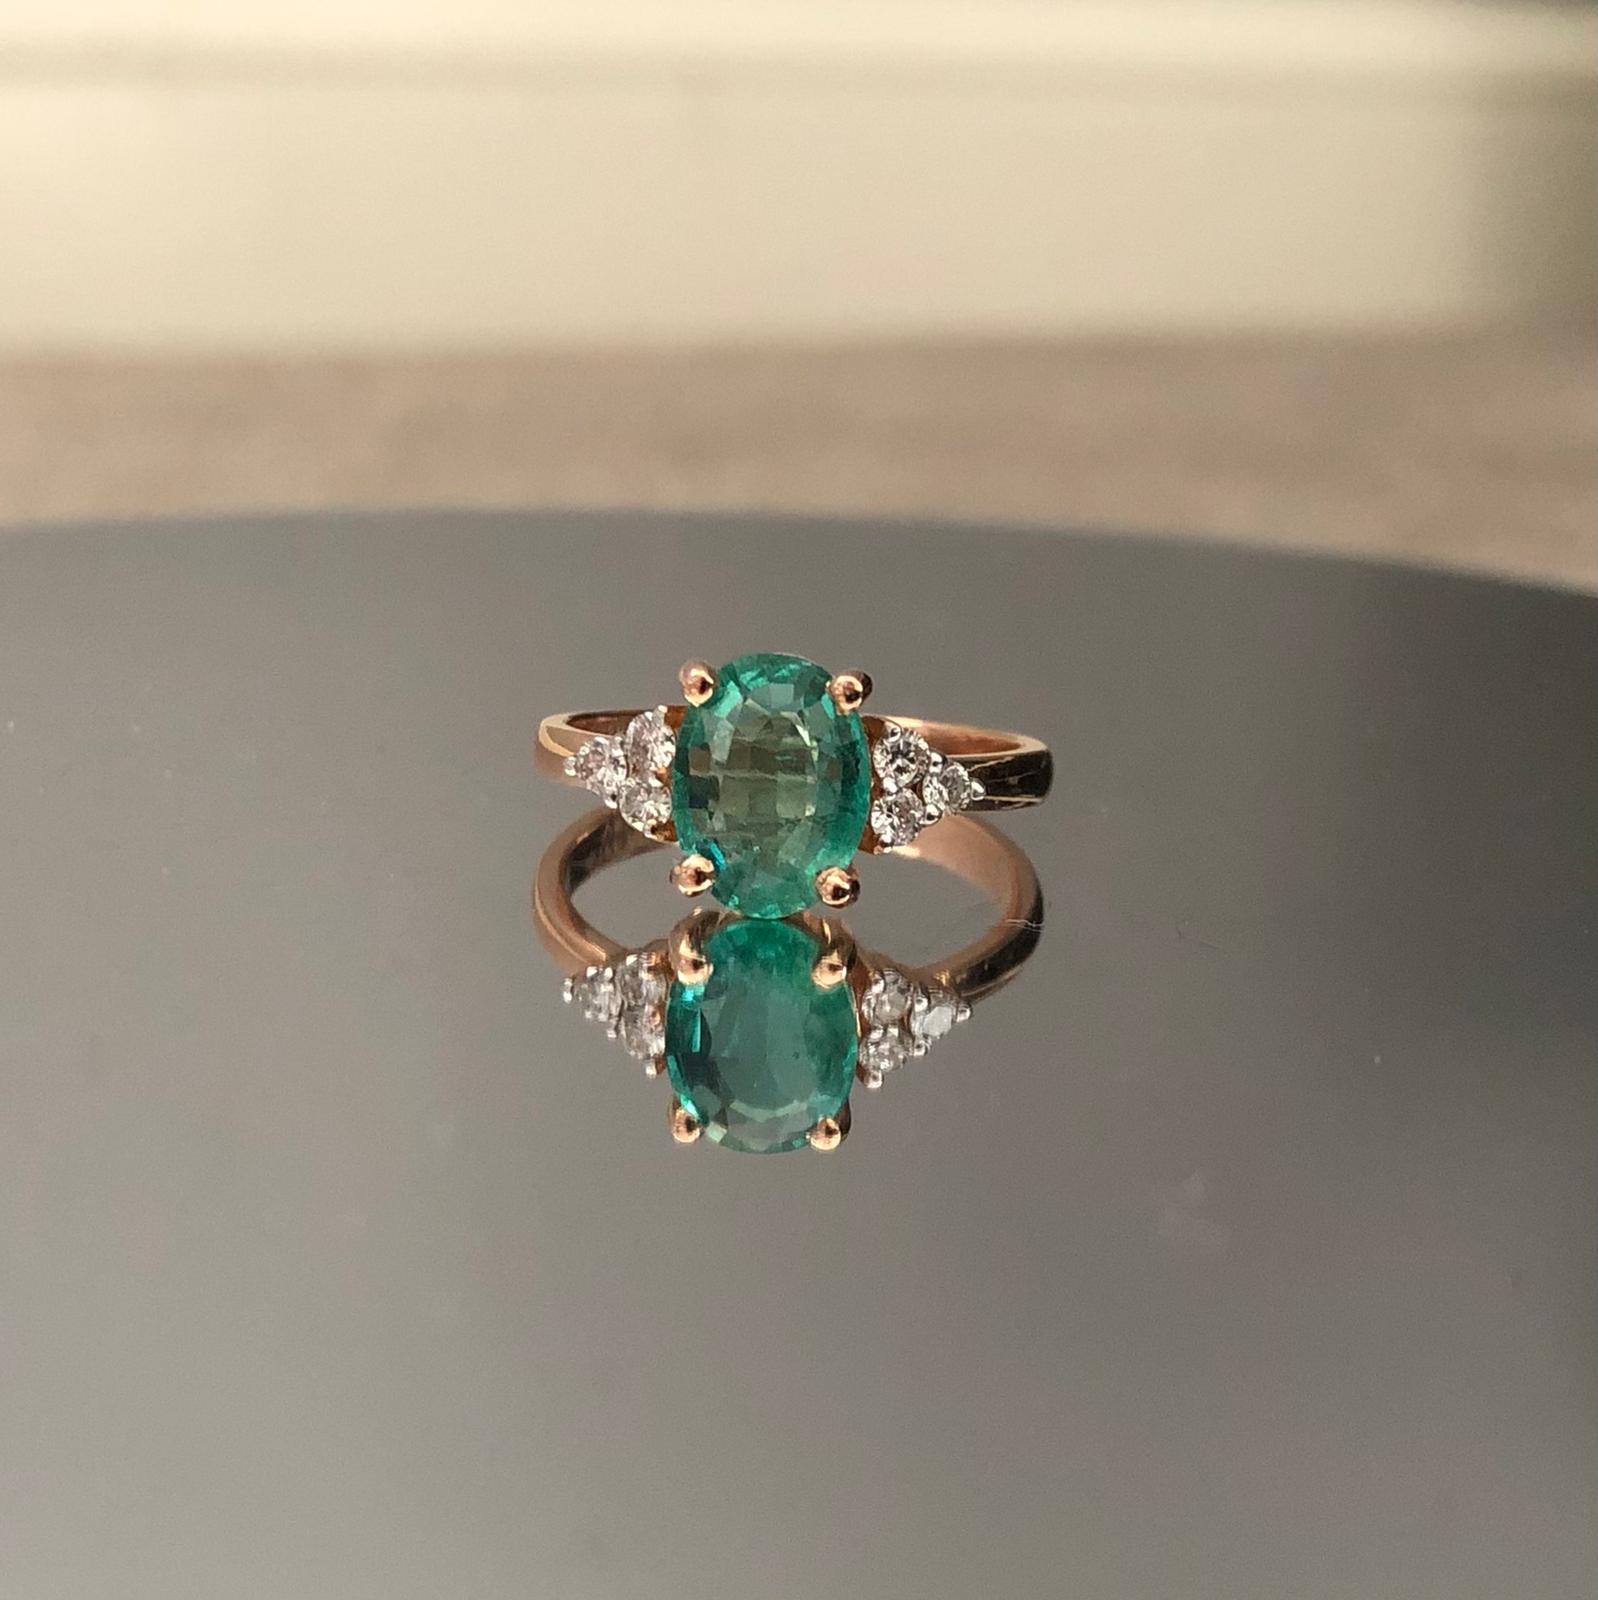 Beautiful 1.83 Carat Natural Emerald Ring With Natural Diamonds and 18k Gold - Image 4 of 5